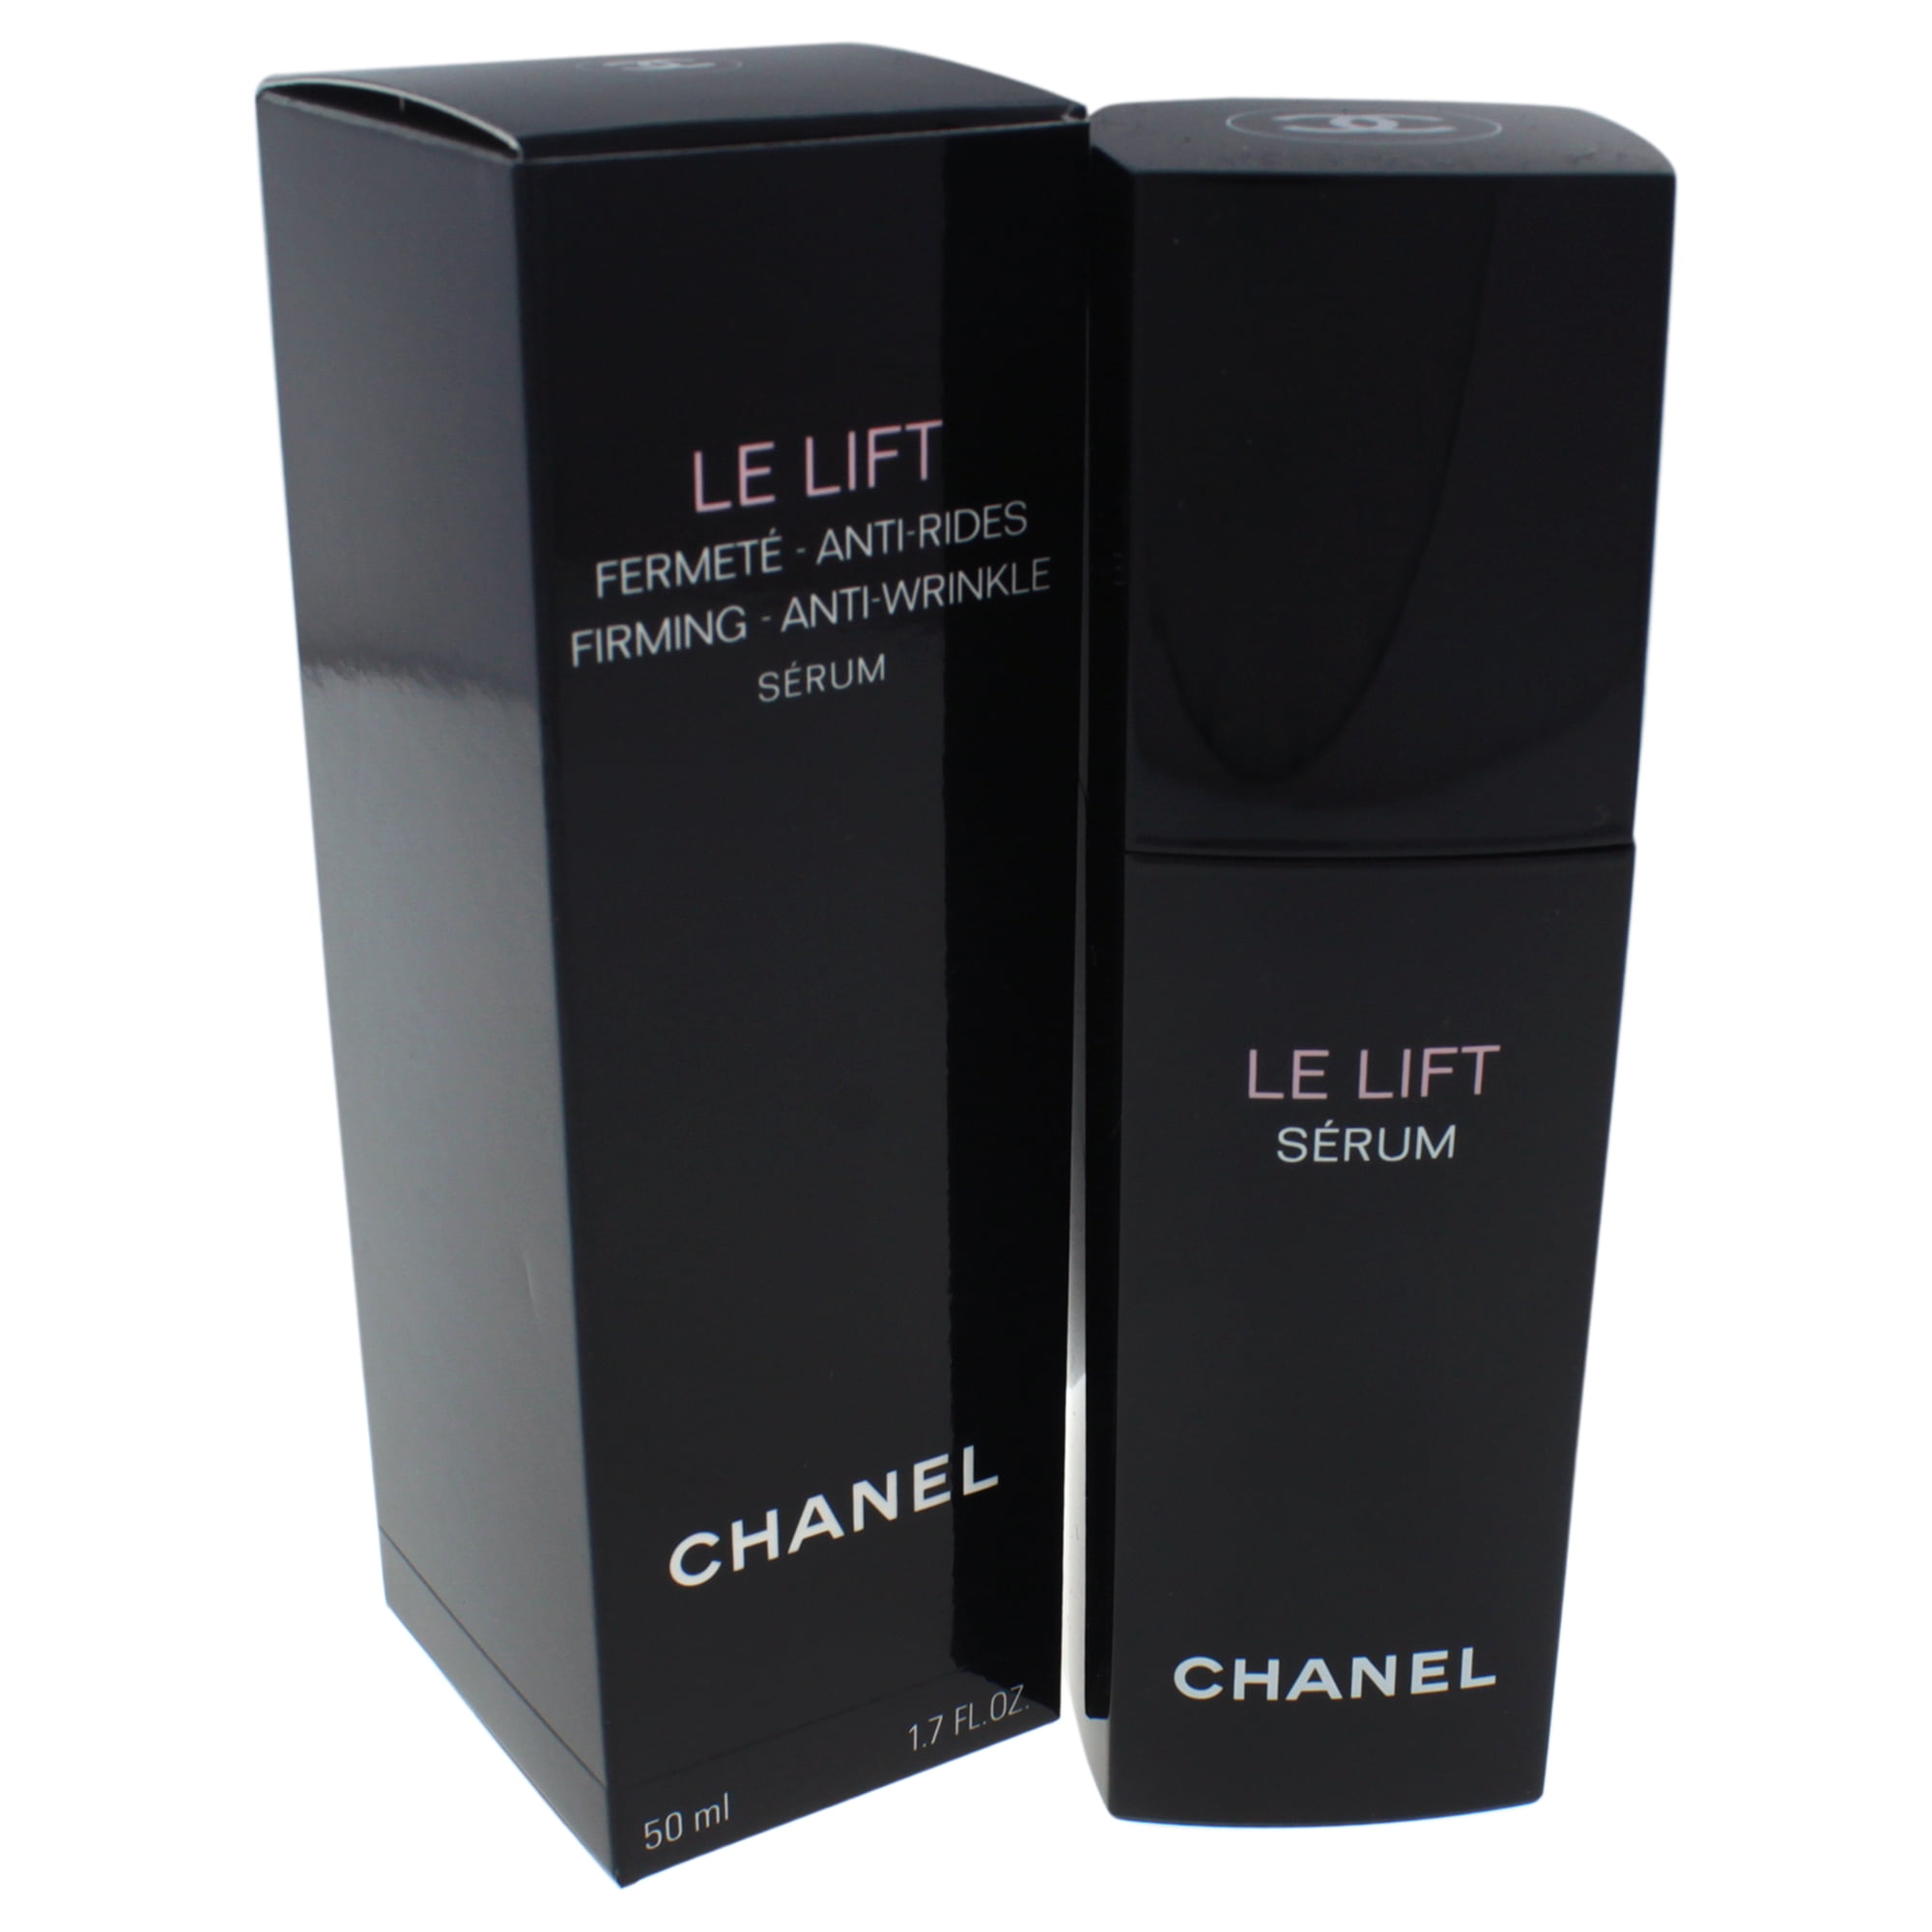 Chanel Le Lift .17 oz / 5 ml Travel Firming Anti Wrinkle Crème Fine